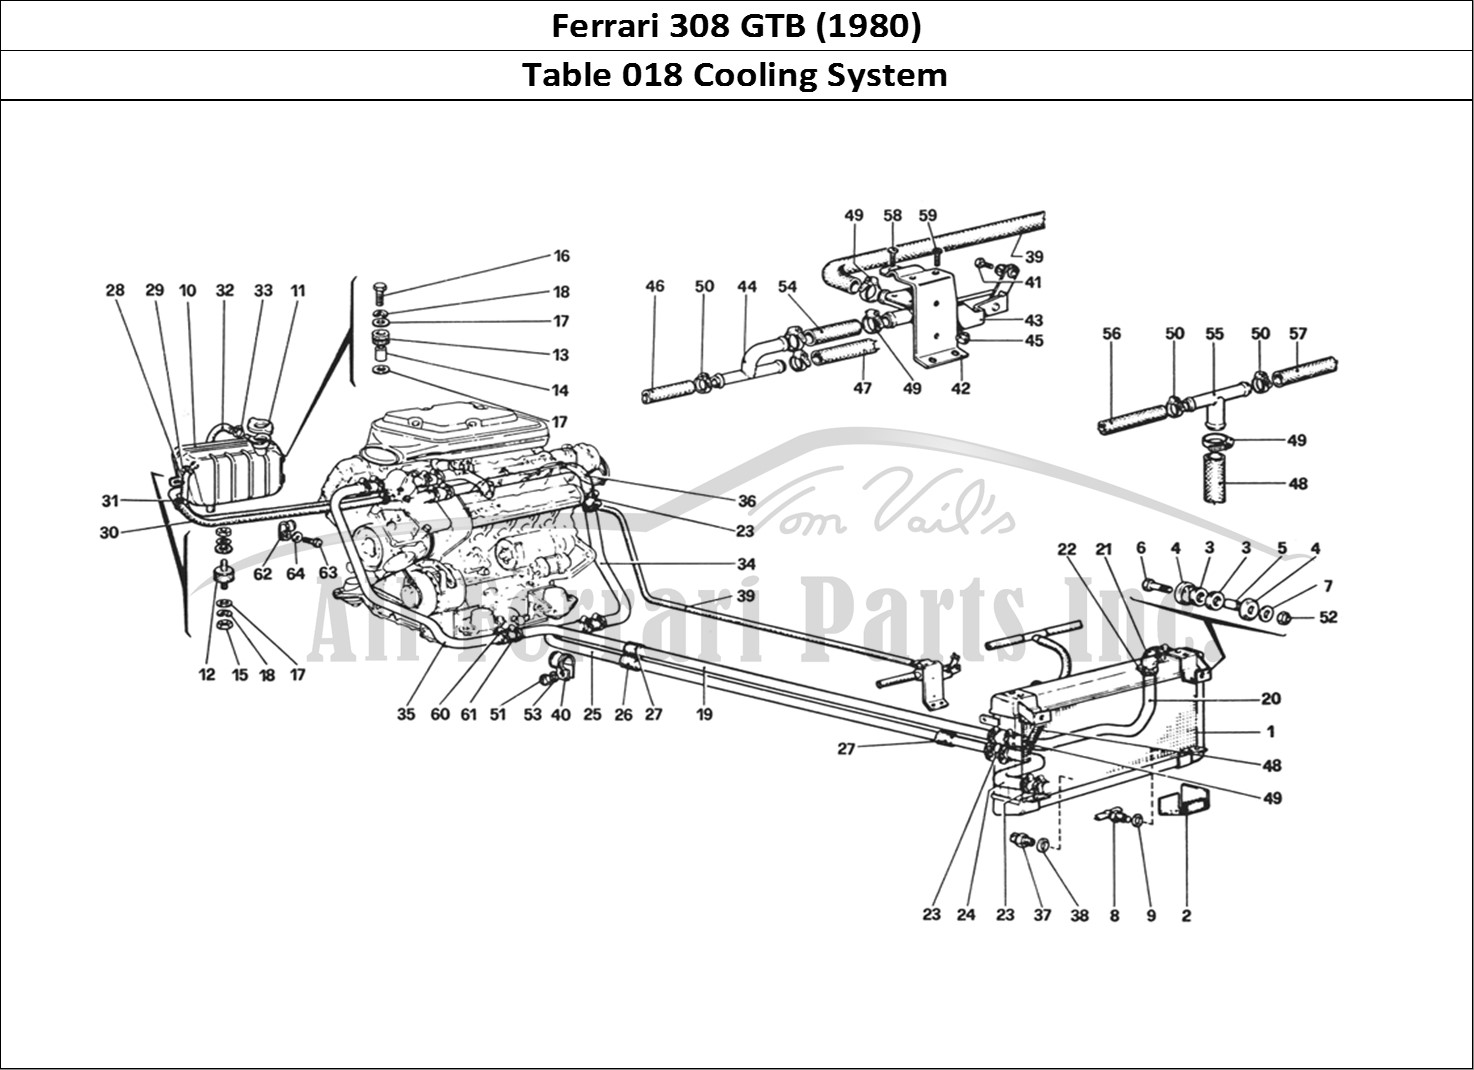 Ferrari Parts Ferrari 308 GTB (1980) Page 018 Cooling System